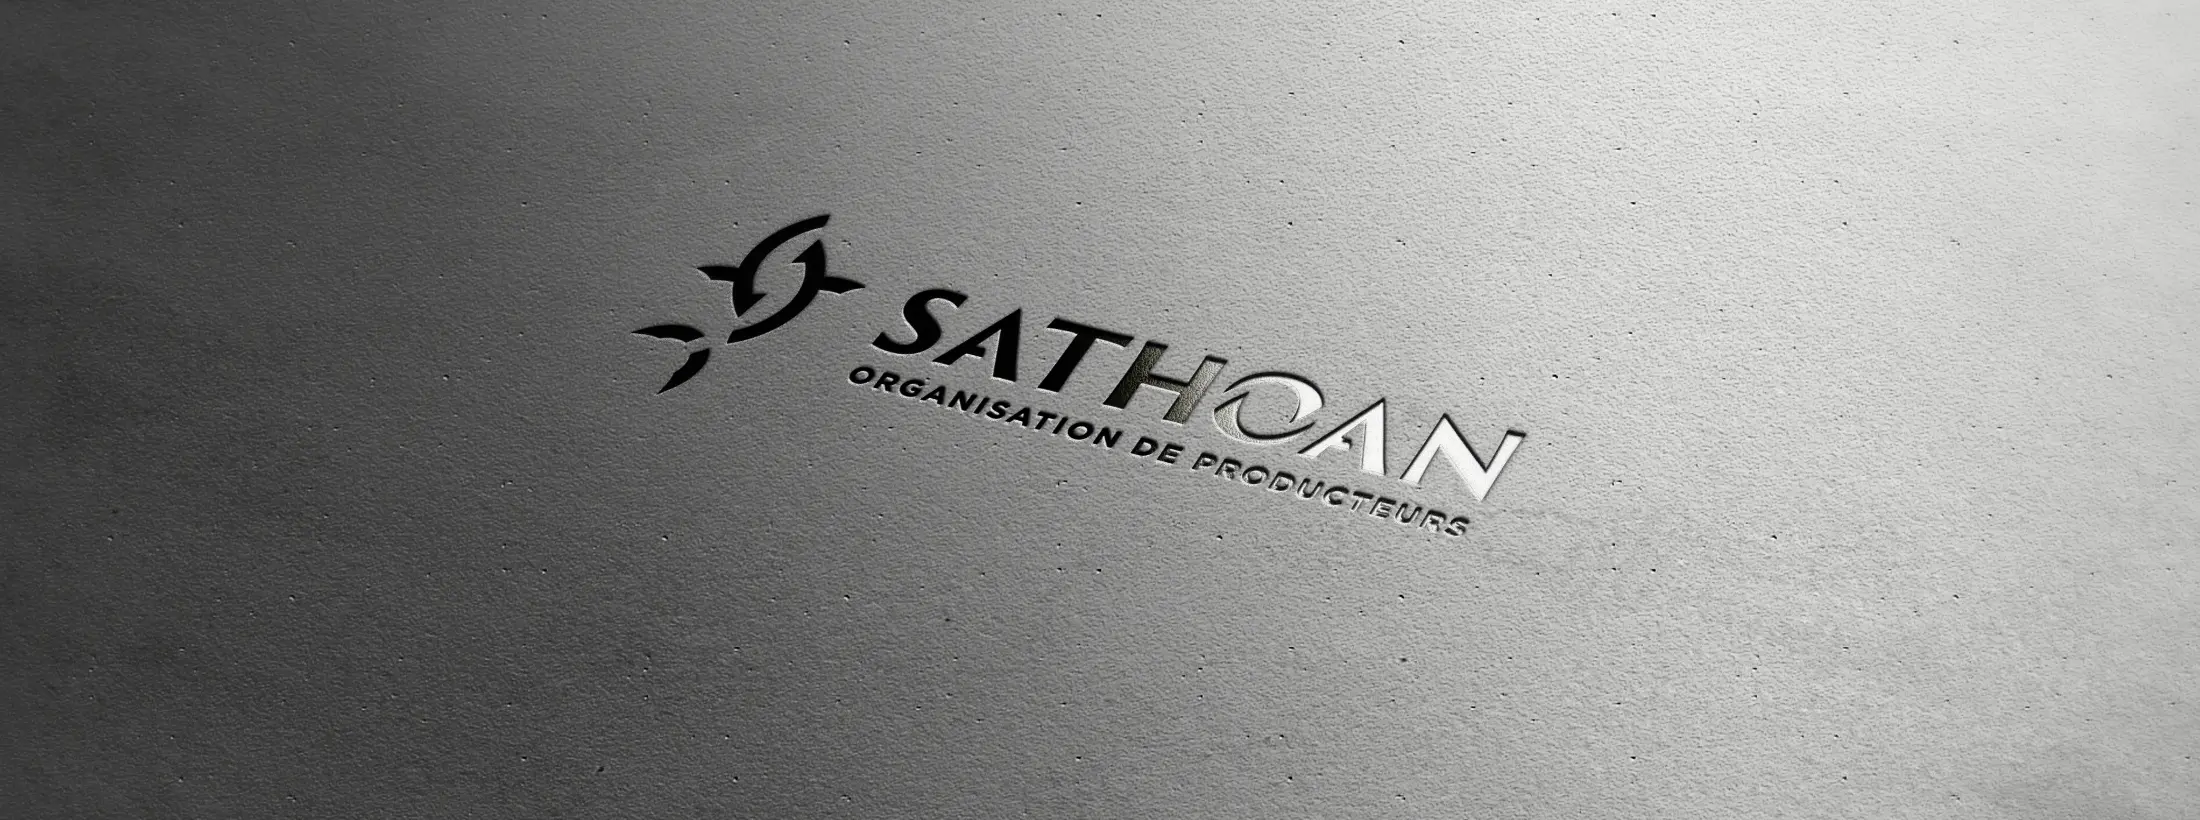 logo sathoan branding design phone identite visuelle osb communication